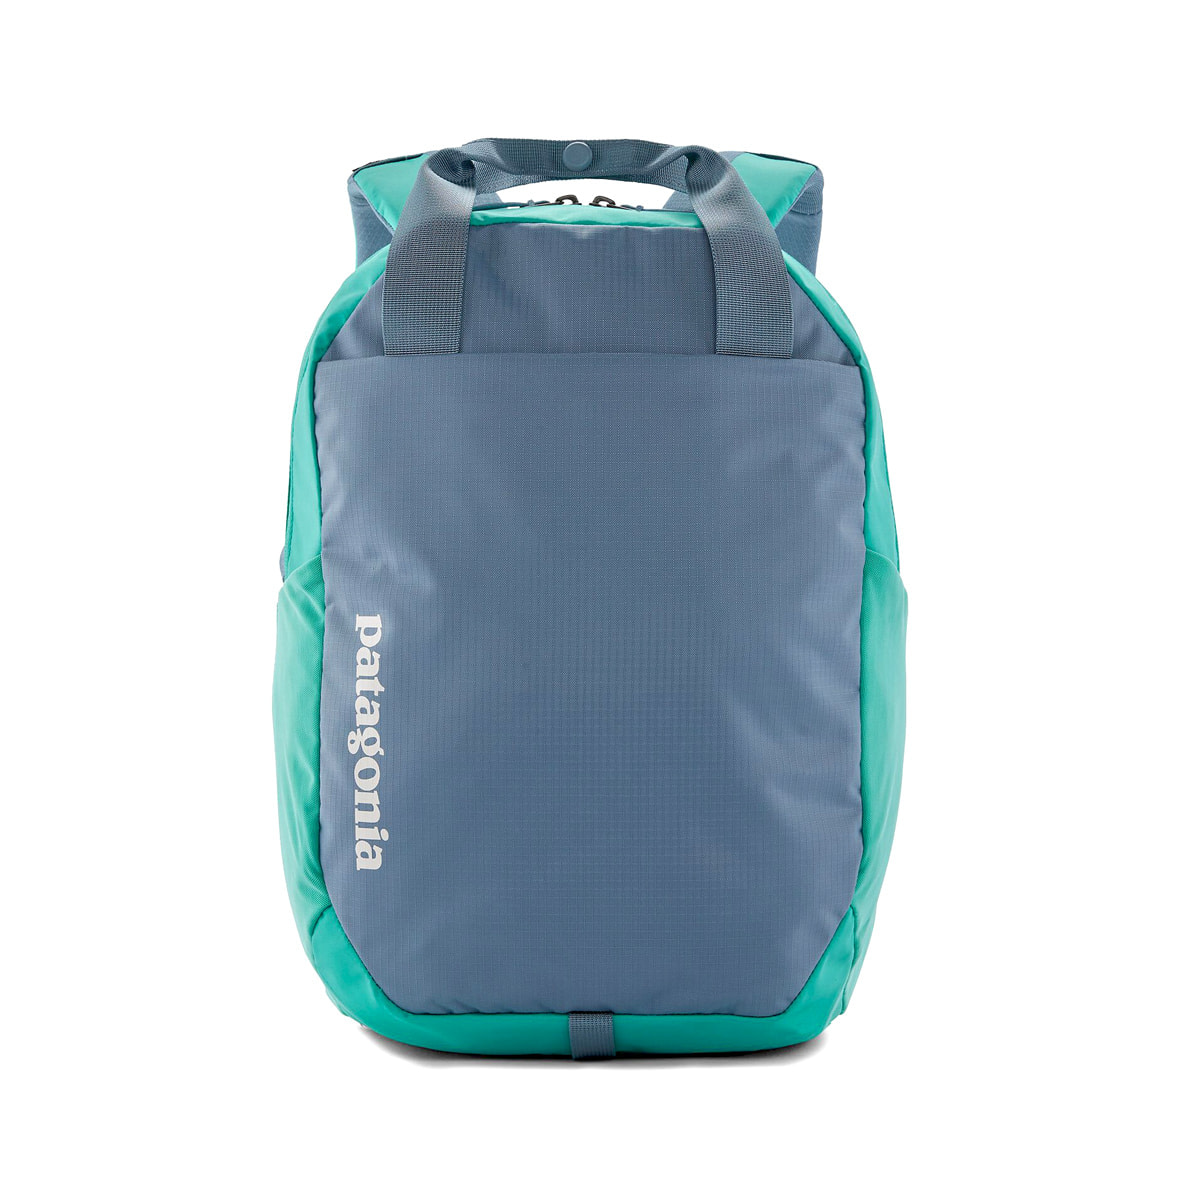 Lightweight backpack for women